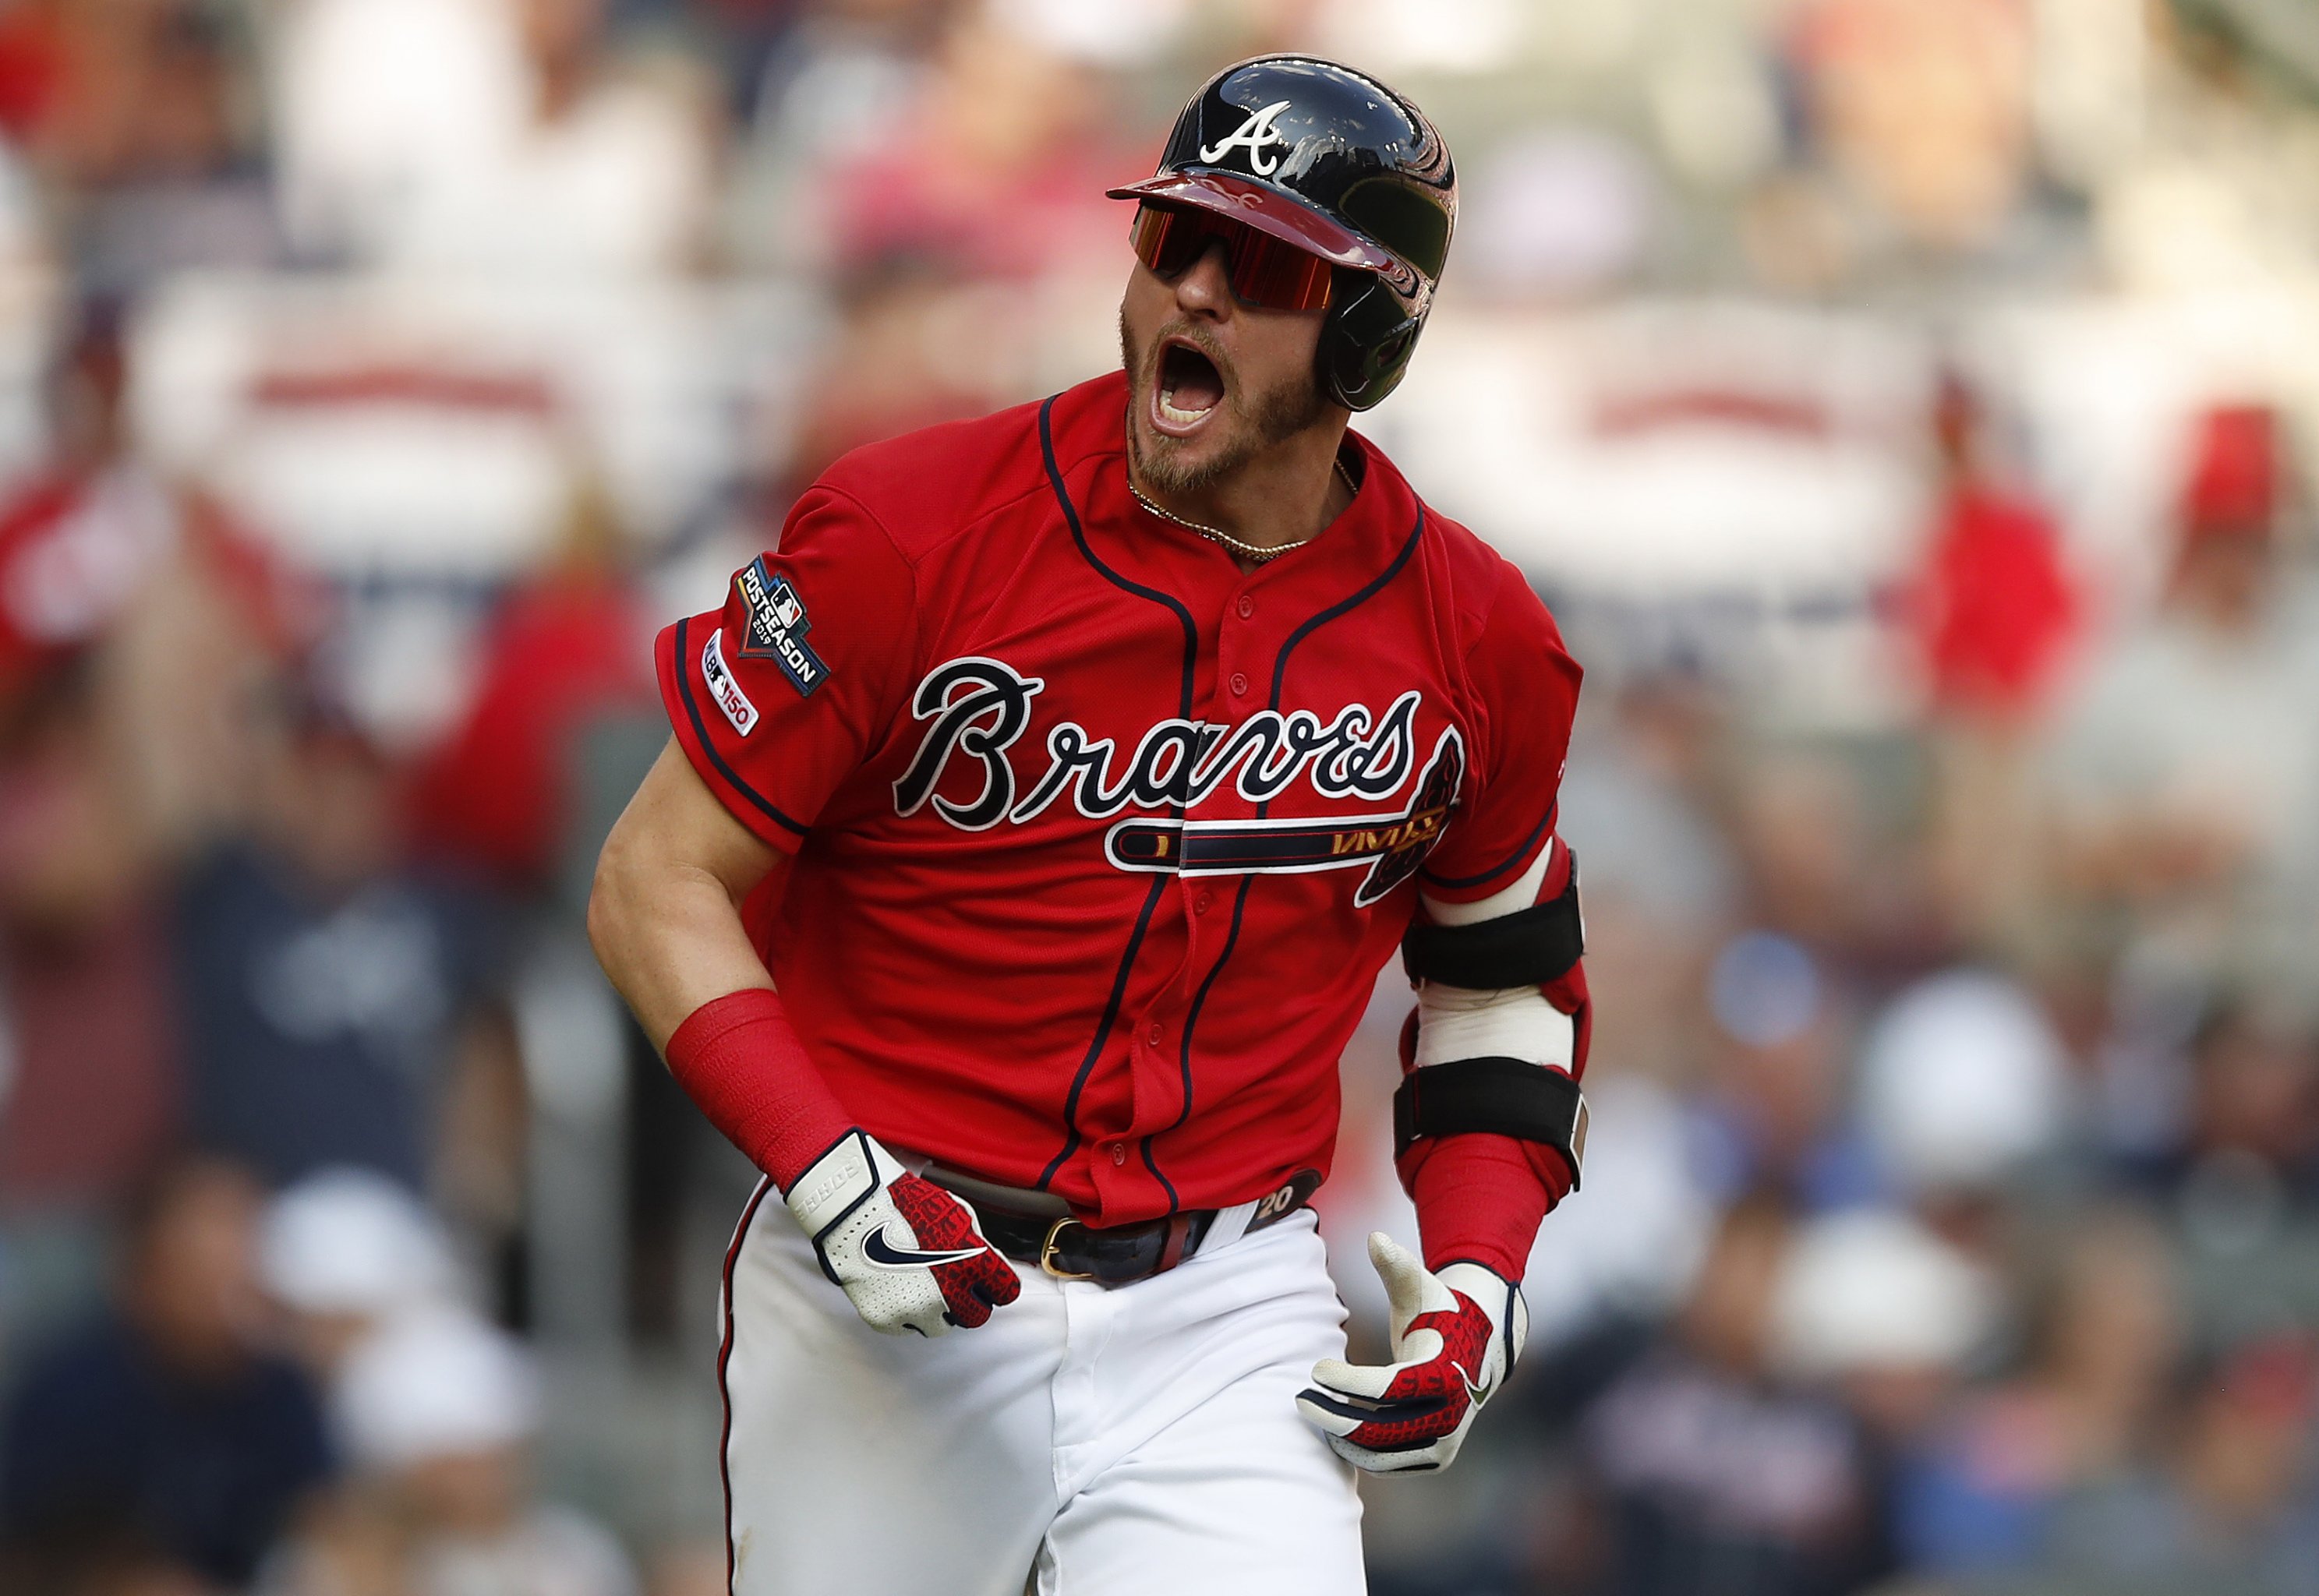 Anthony Swarzak (Team-Issued or Game-Used) 2019 Atlanta Braves